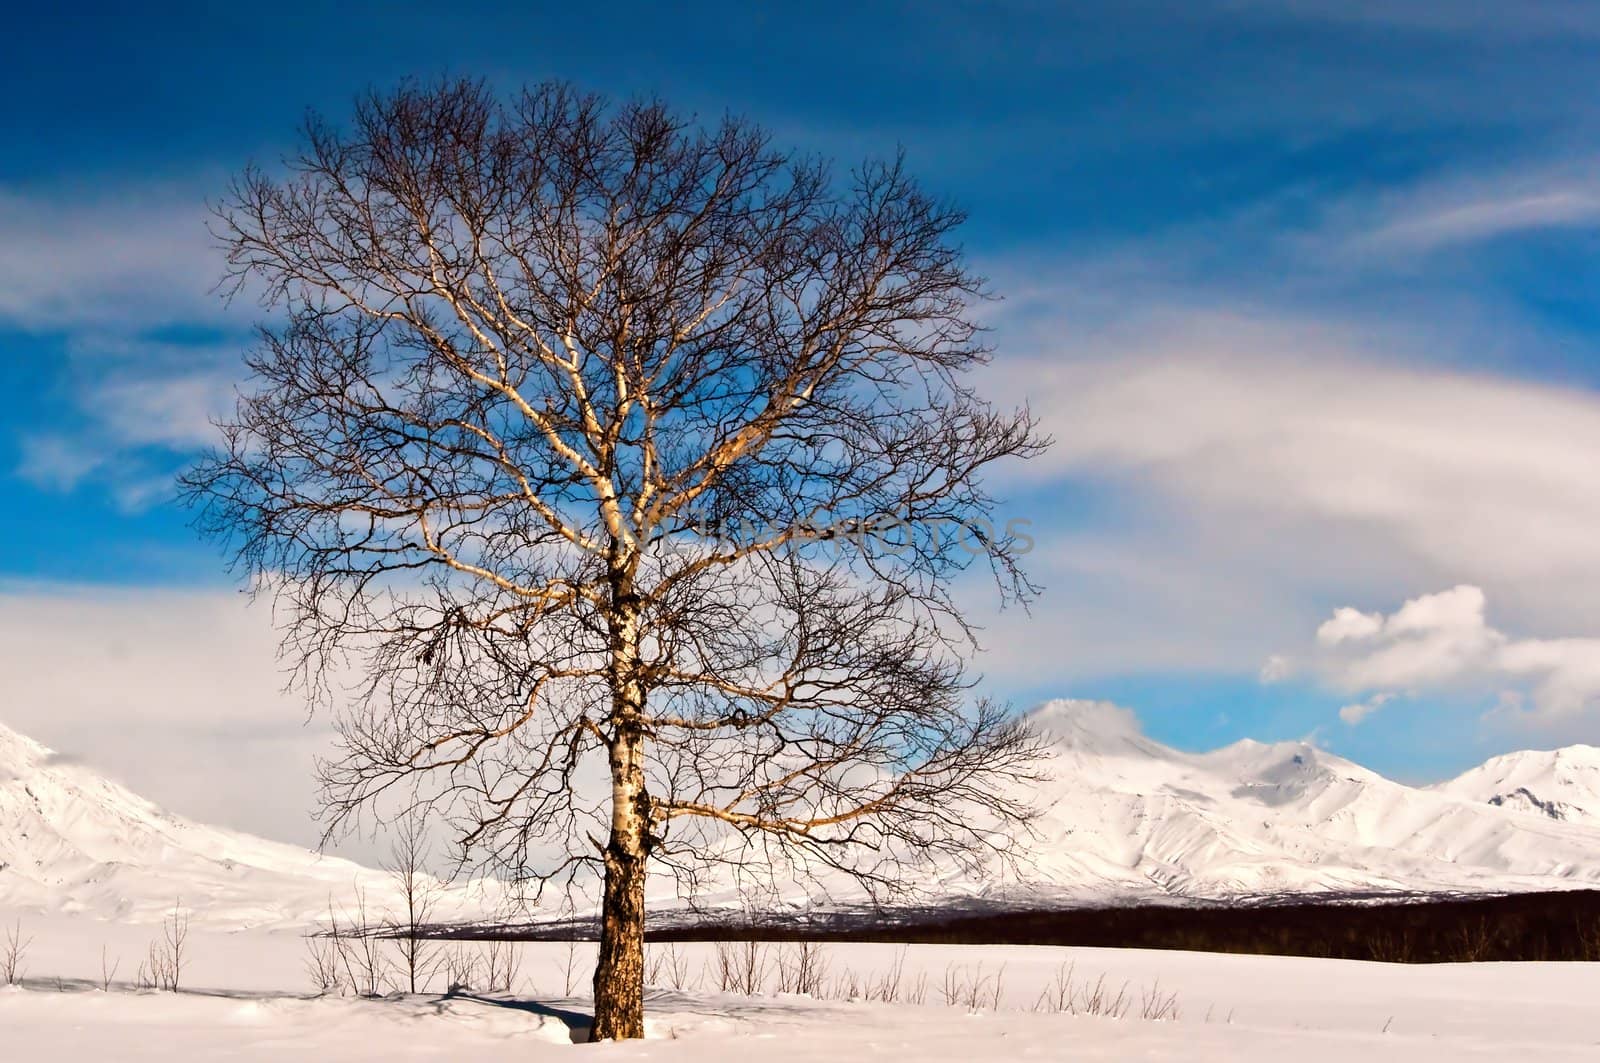 Tree in winter by alena0509